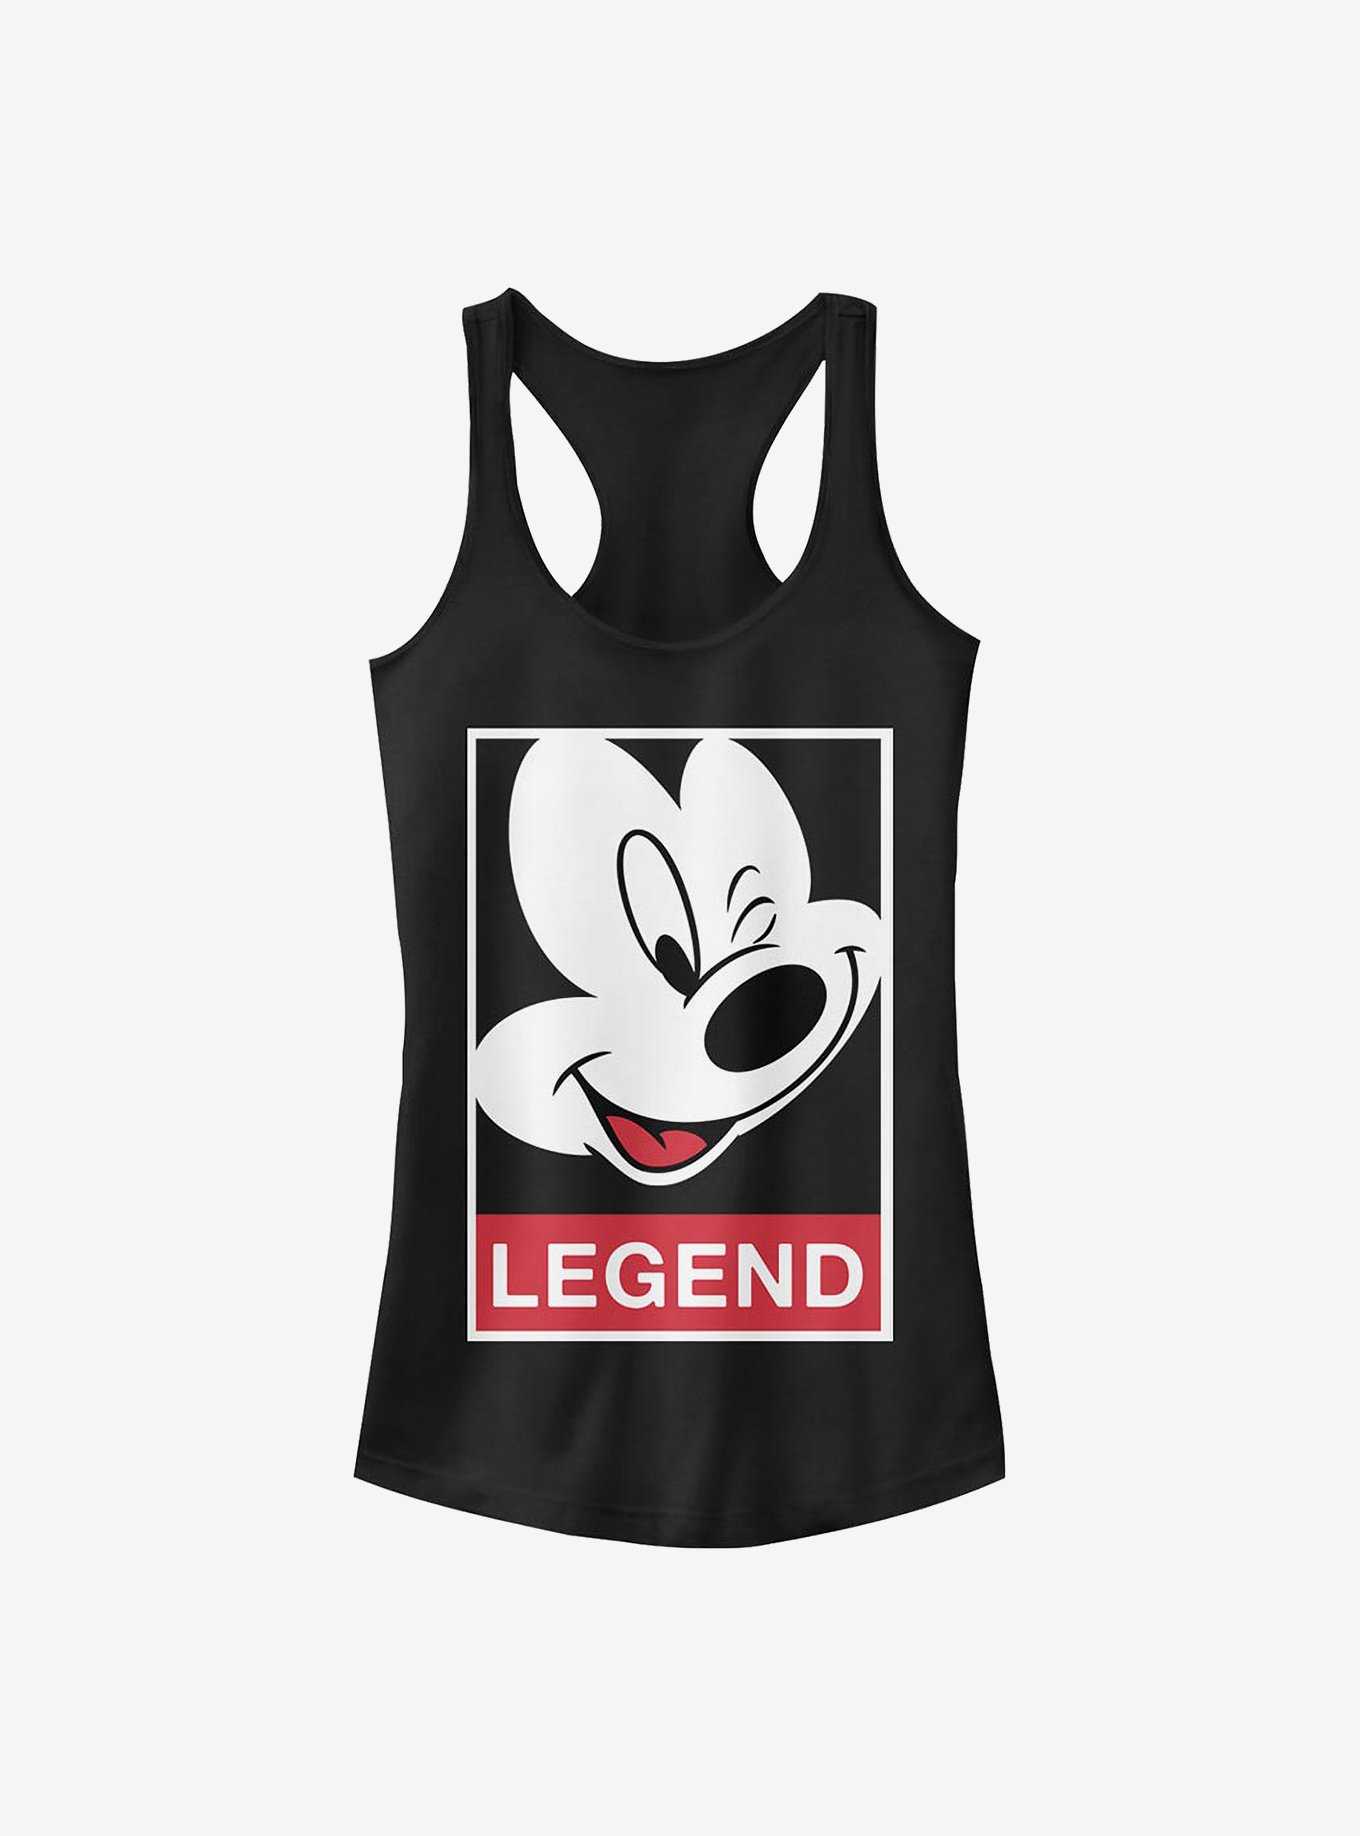 Disney Mickey Mouse Legend Girls Tank, , hi-res